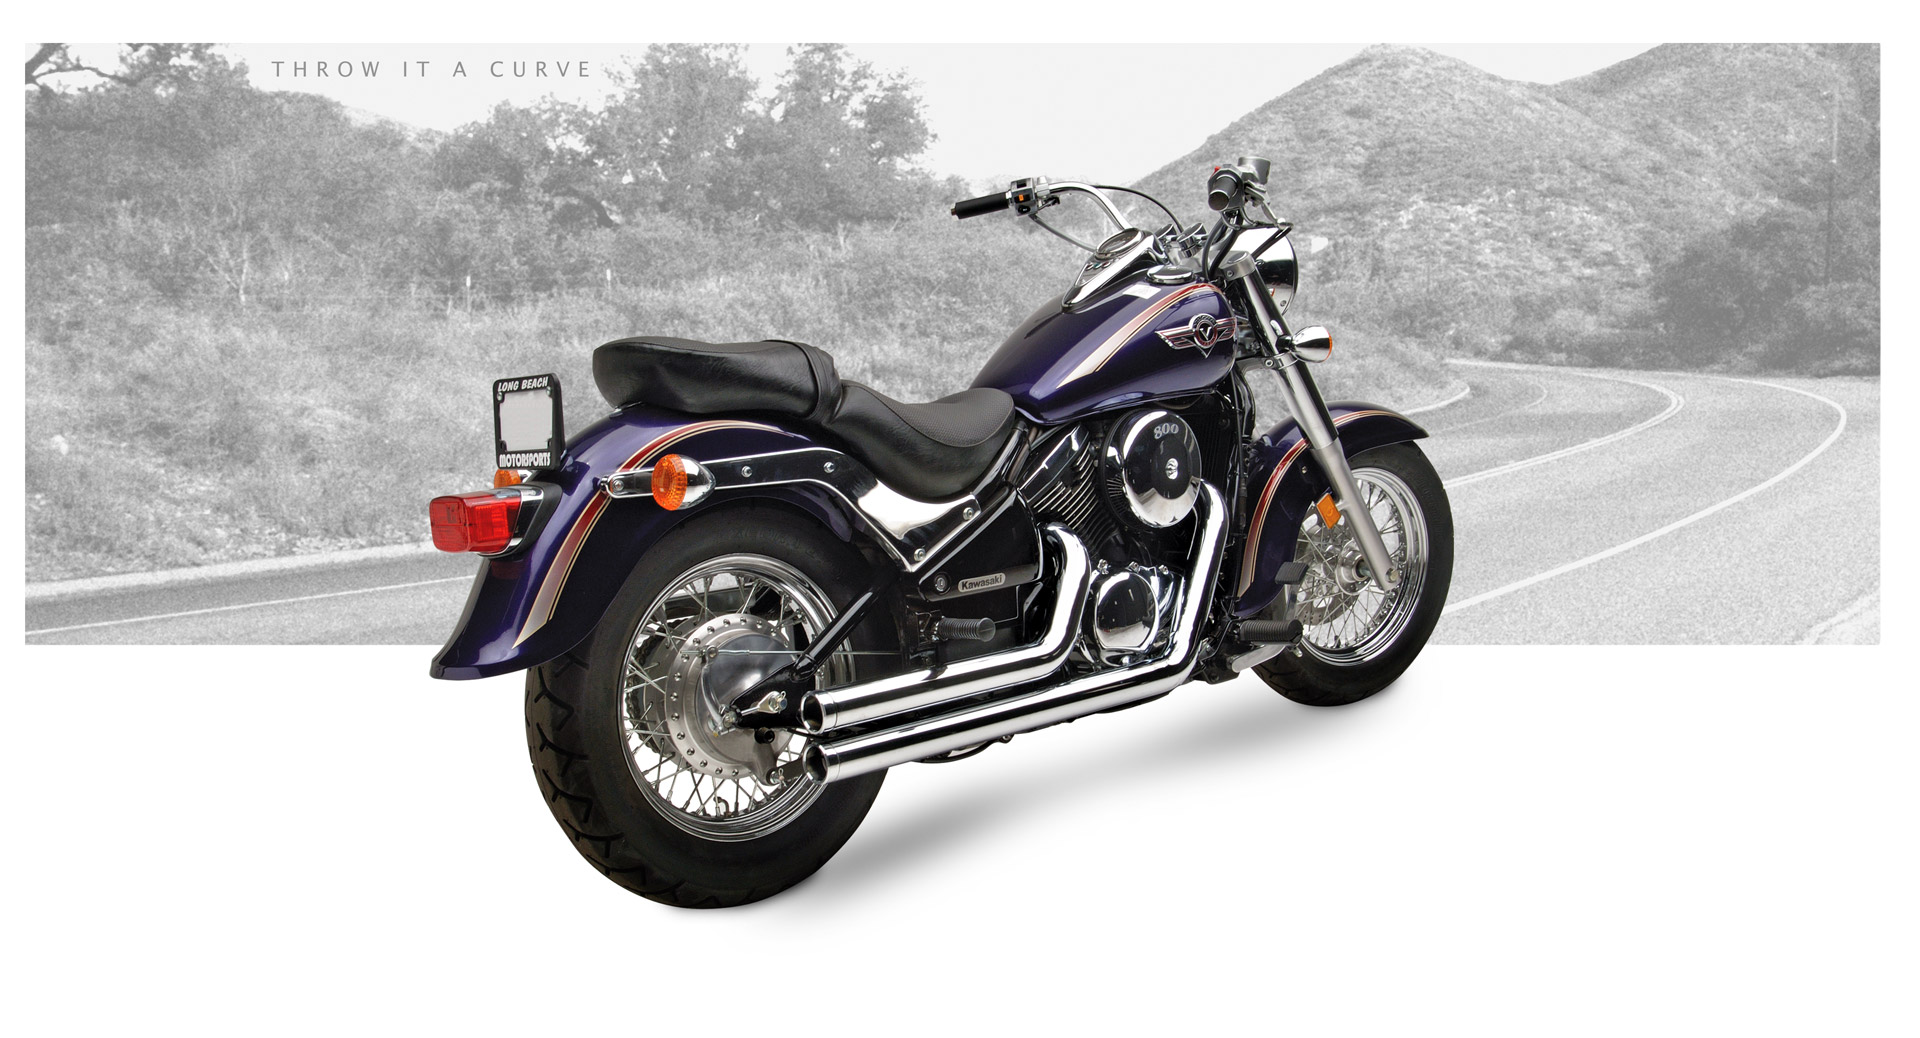 Kawasaki Vulcan 800 Classic Motorcycle Exhaust - American Classic II Chrome Hard-Krome